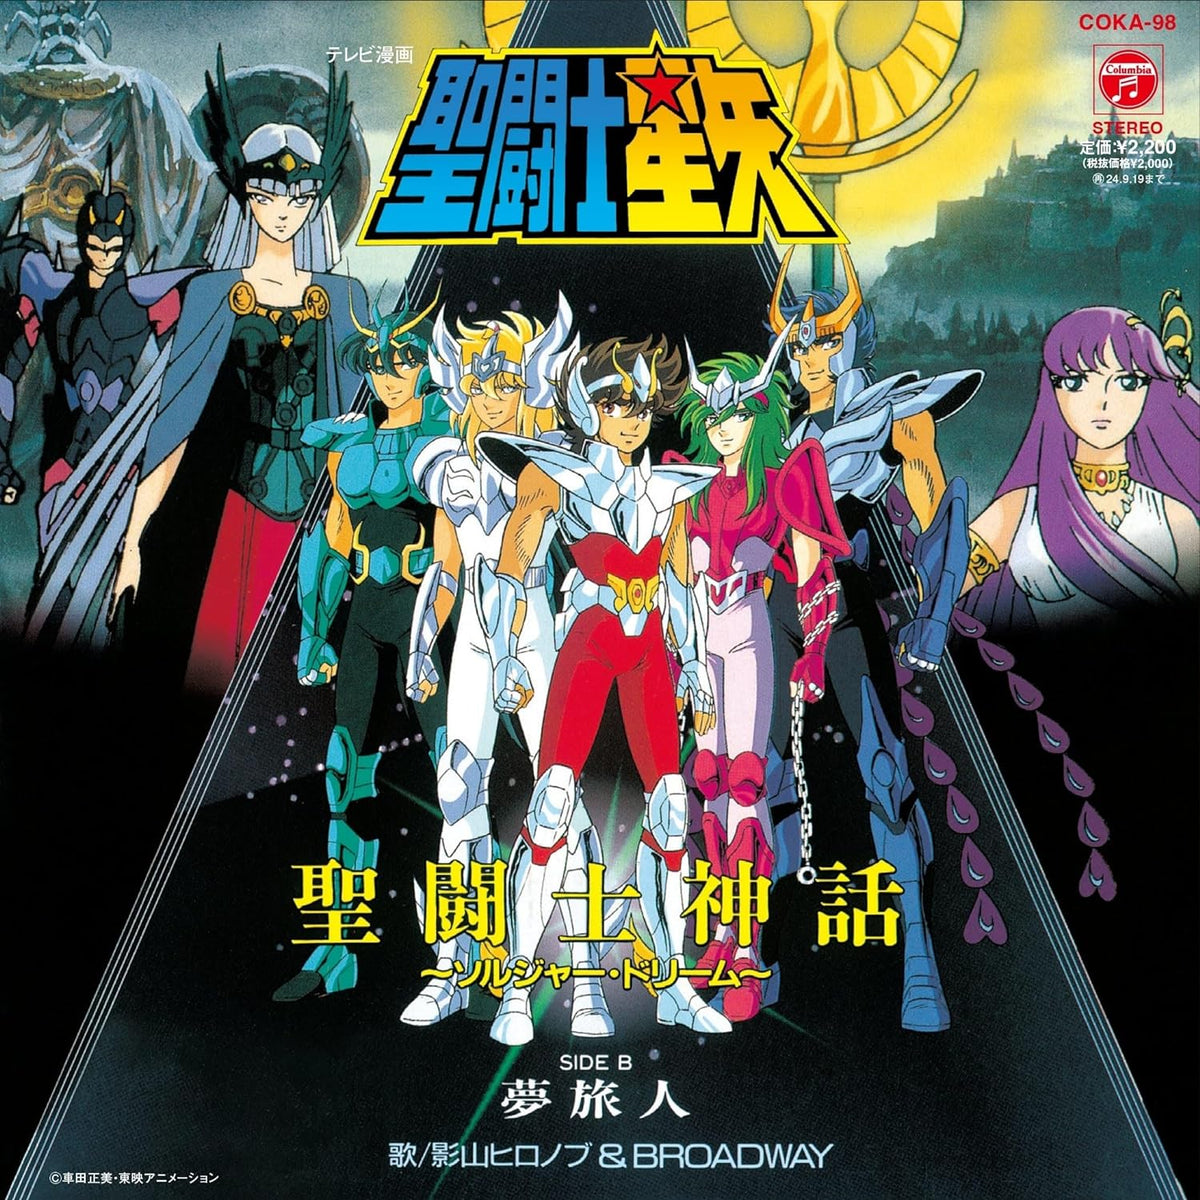 Saint Shinwa - Soldier Dream / Yumetabibito - Saint Seiya OST (Les chevaliers du zodiaque)